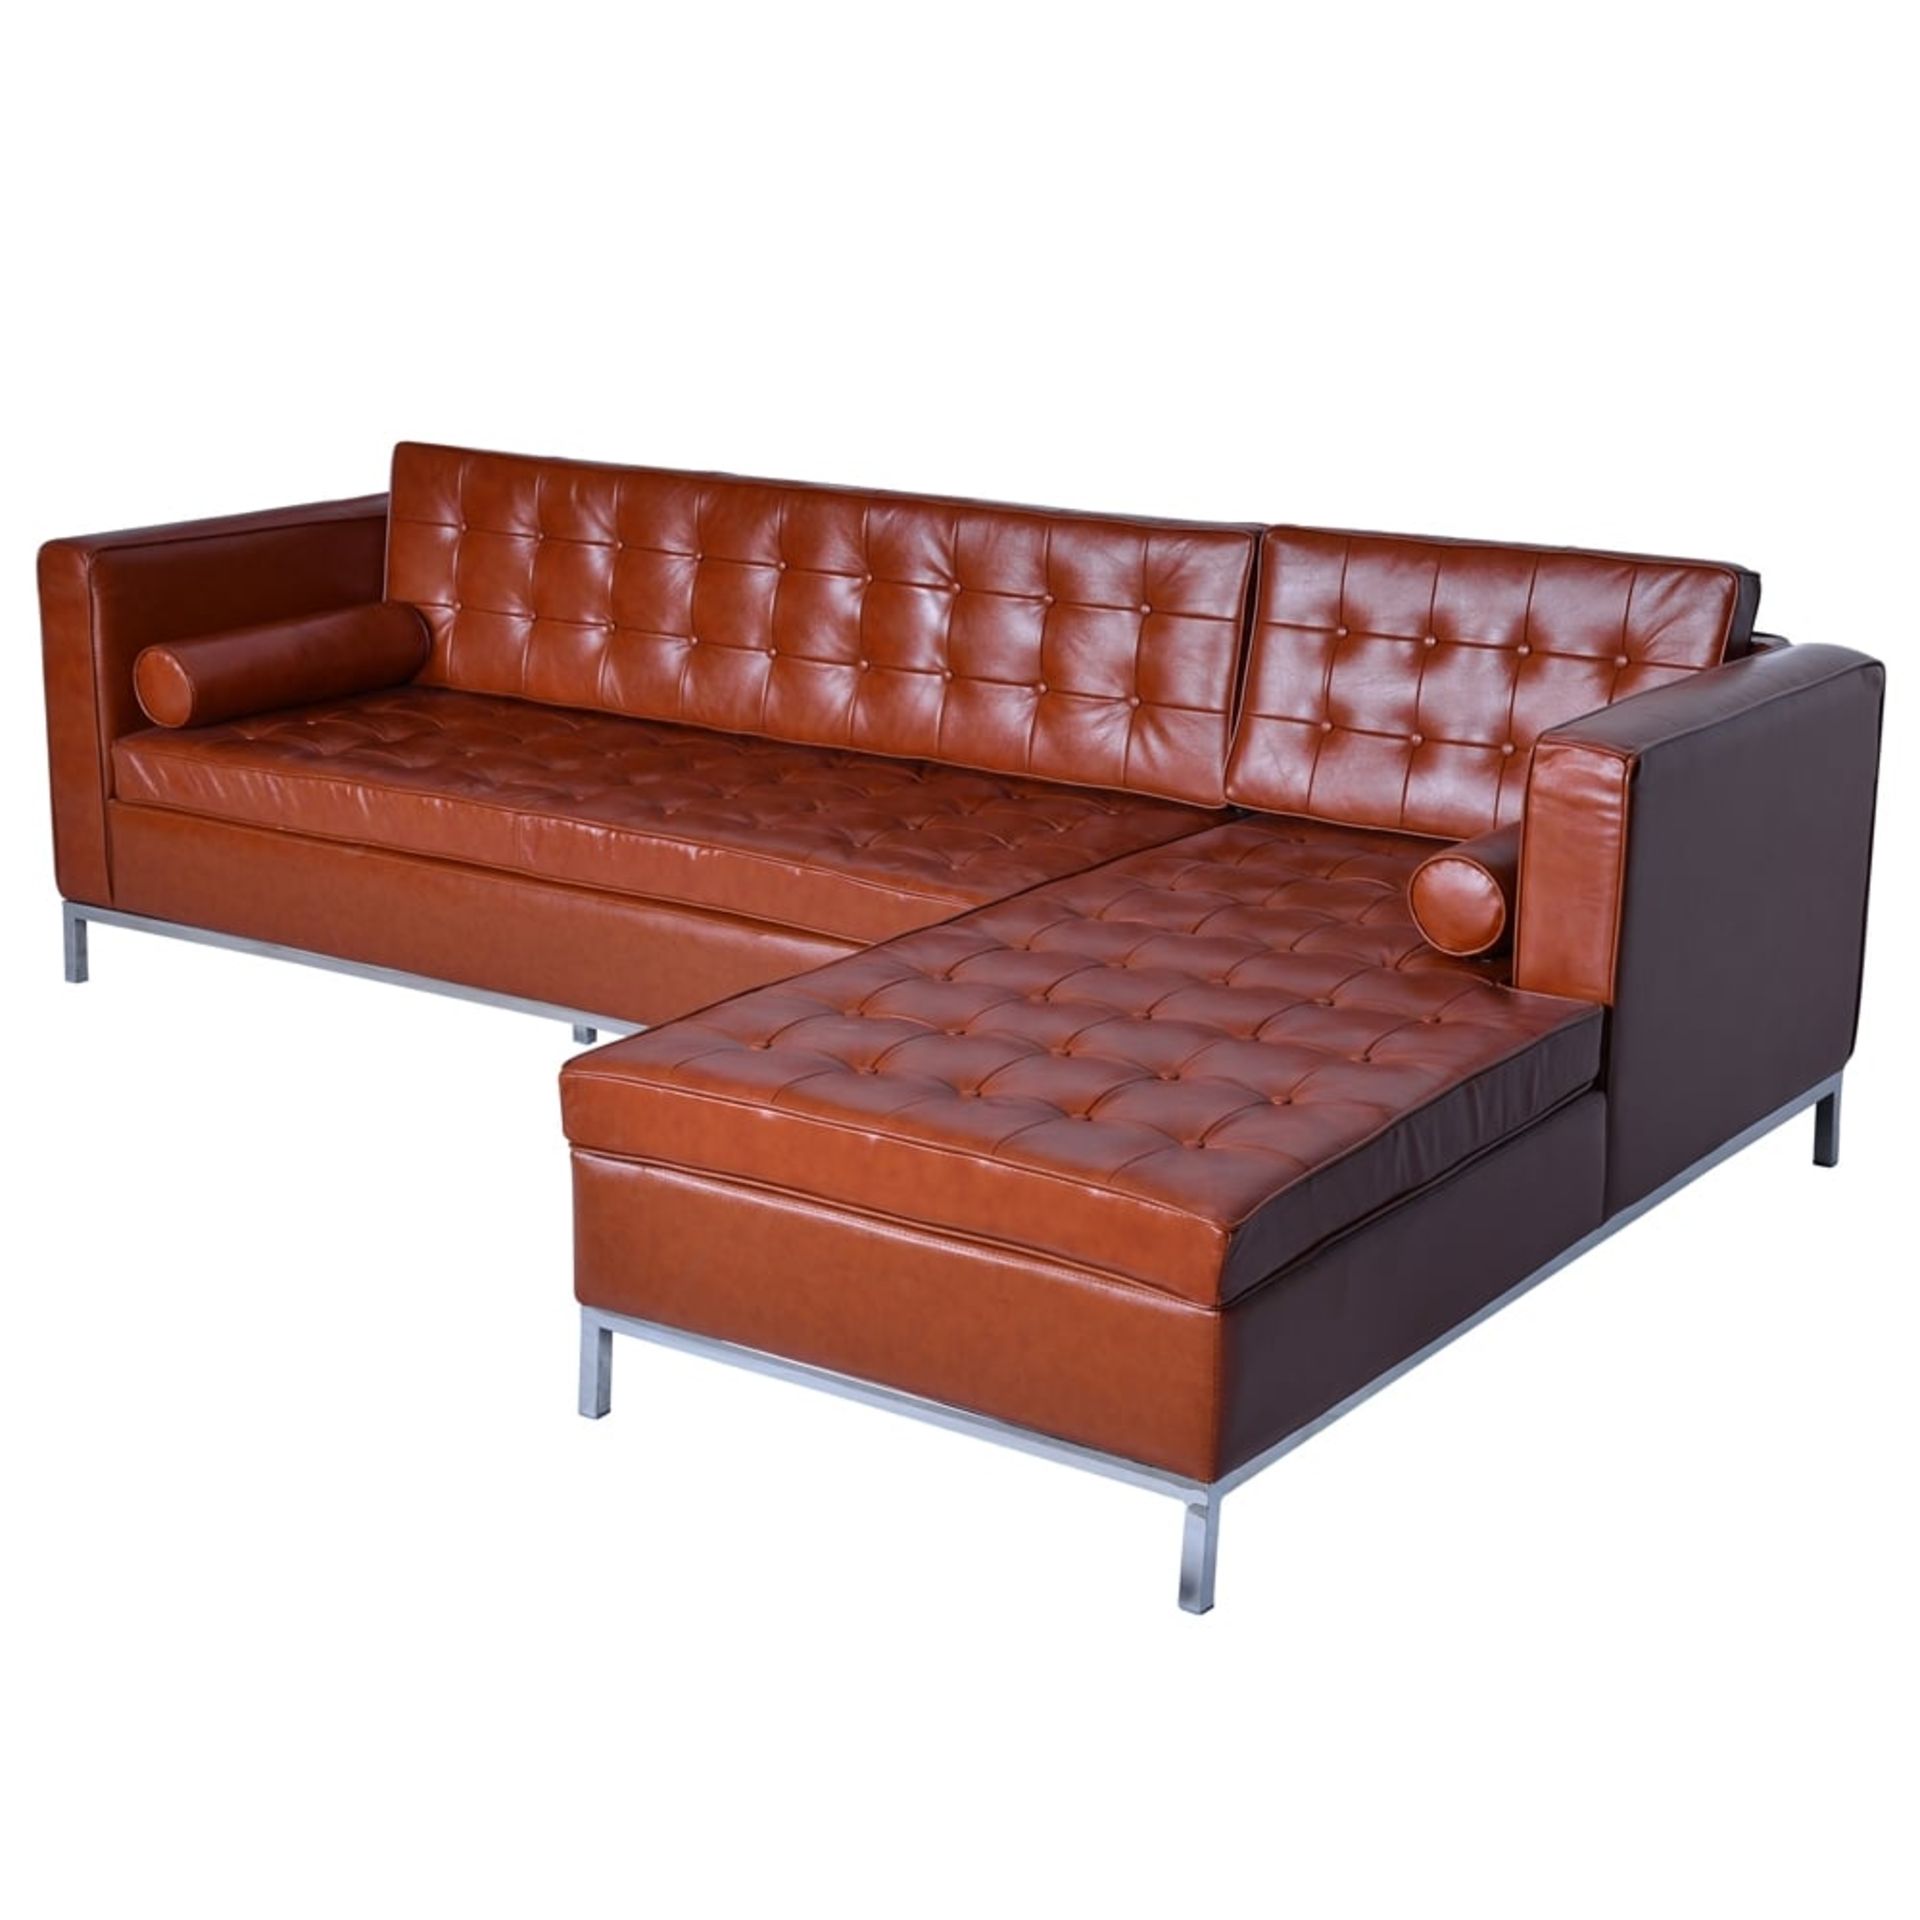 Leather Carpi Left Corner Sofa - Image 3 of 3